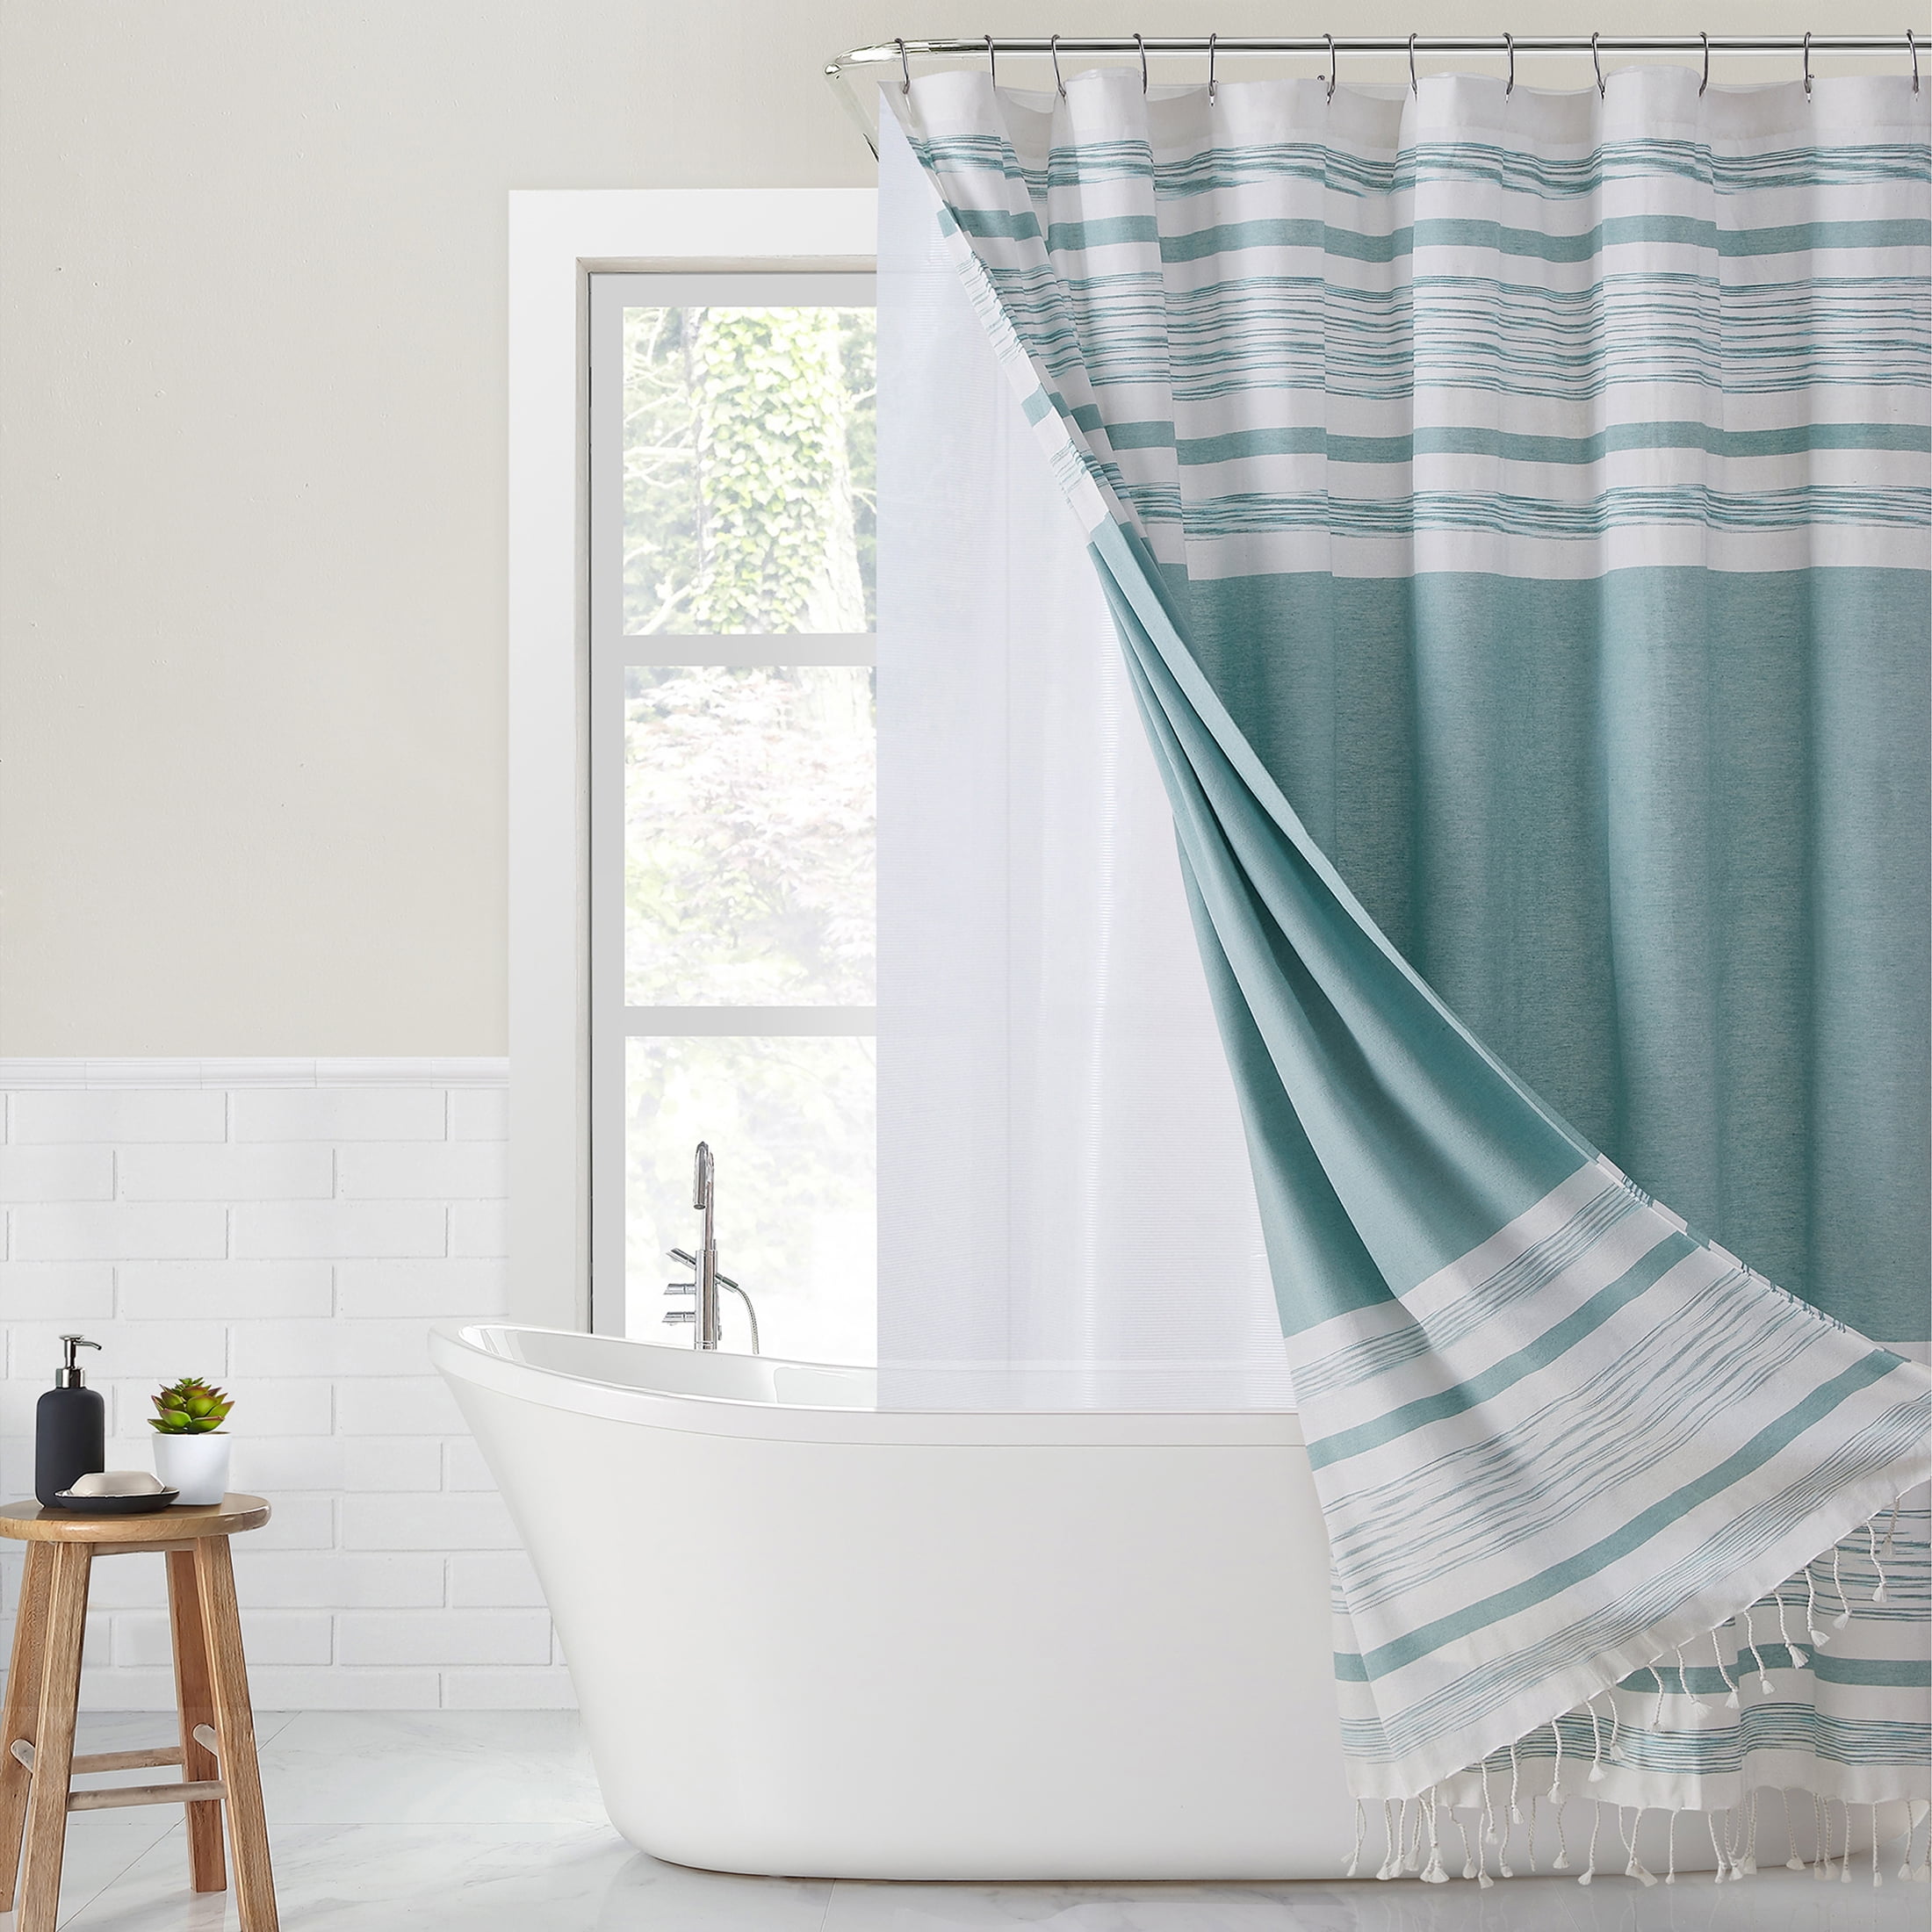 Buffalo Bills Waterproof Mildew Resistant Bathroom Shower Curtain Set 72x72" 